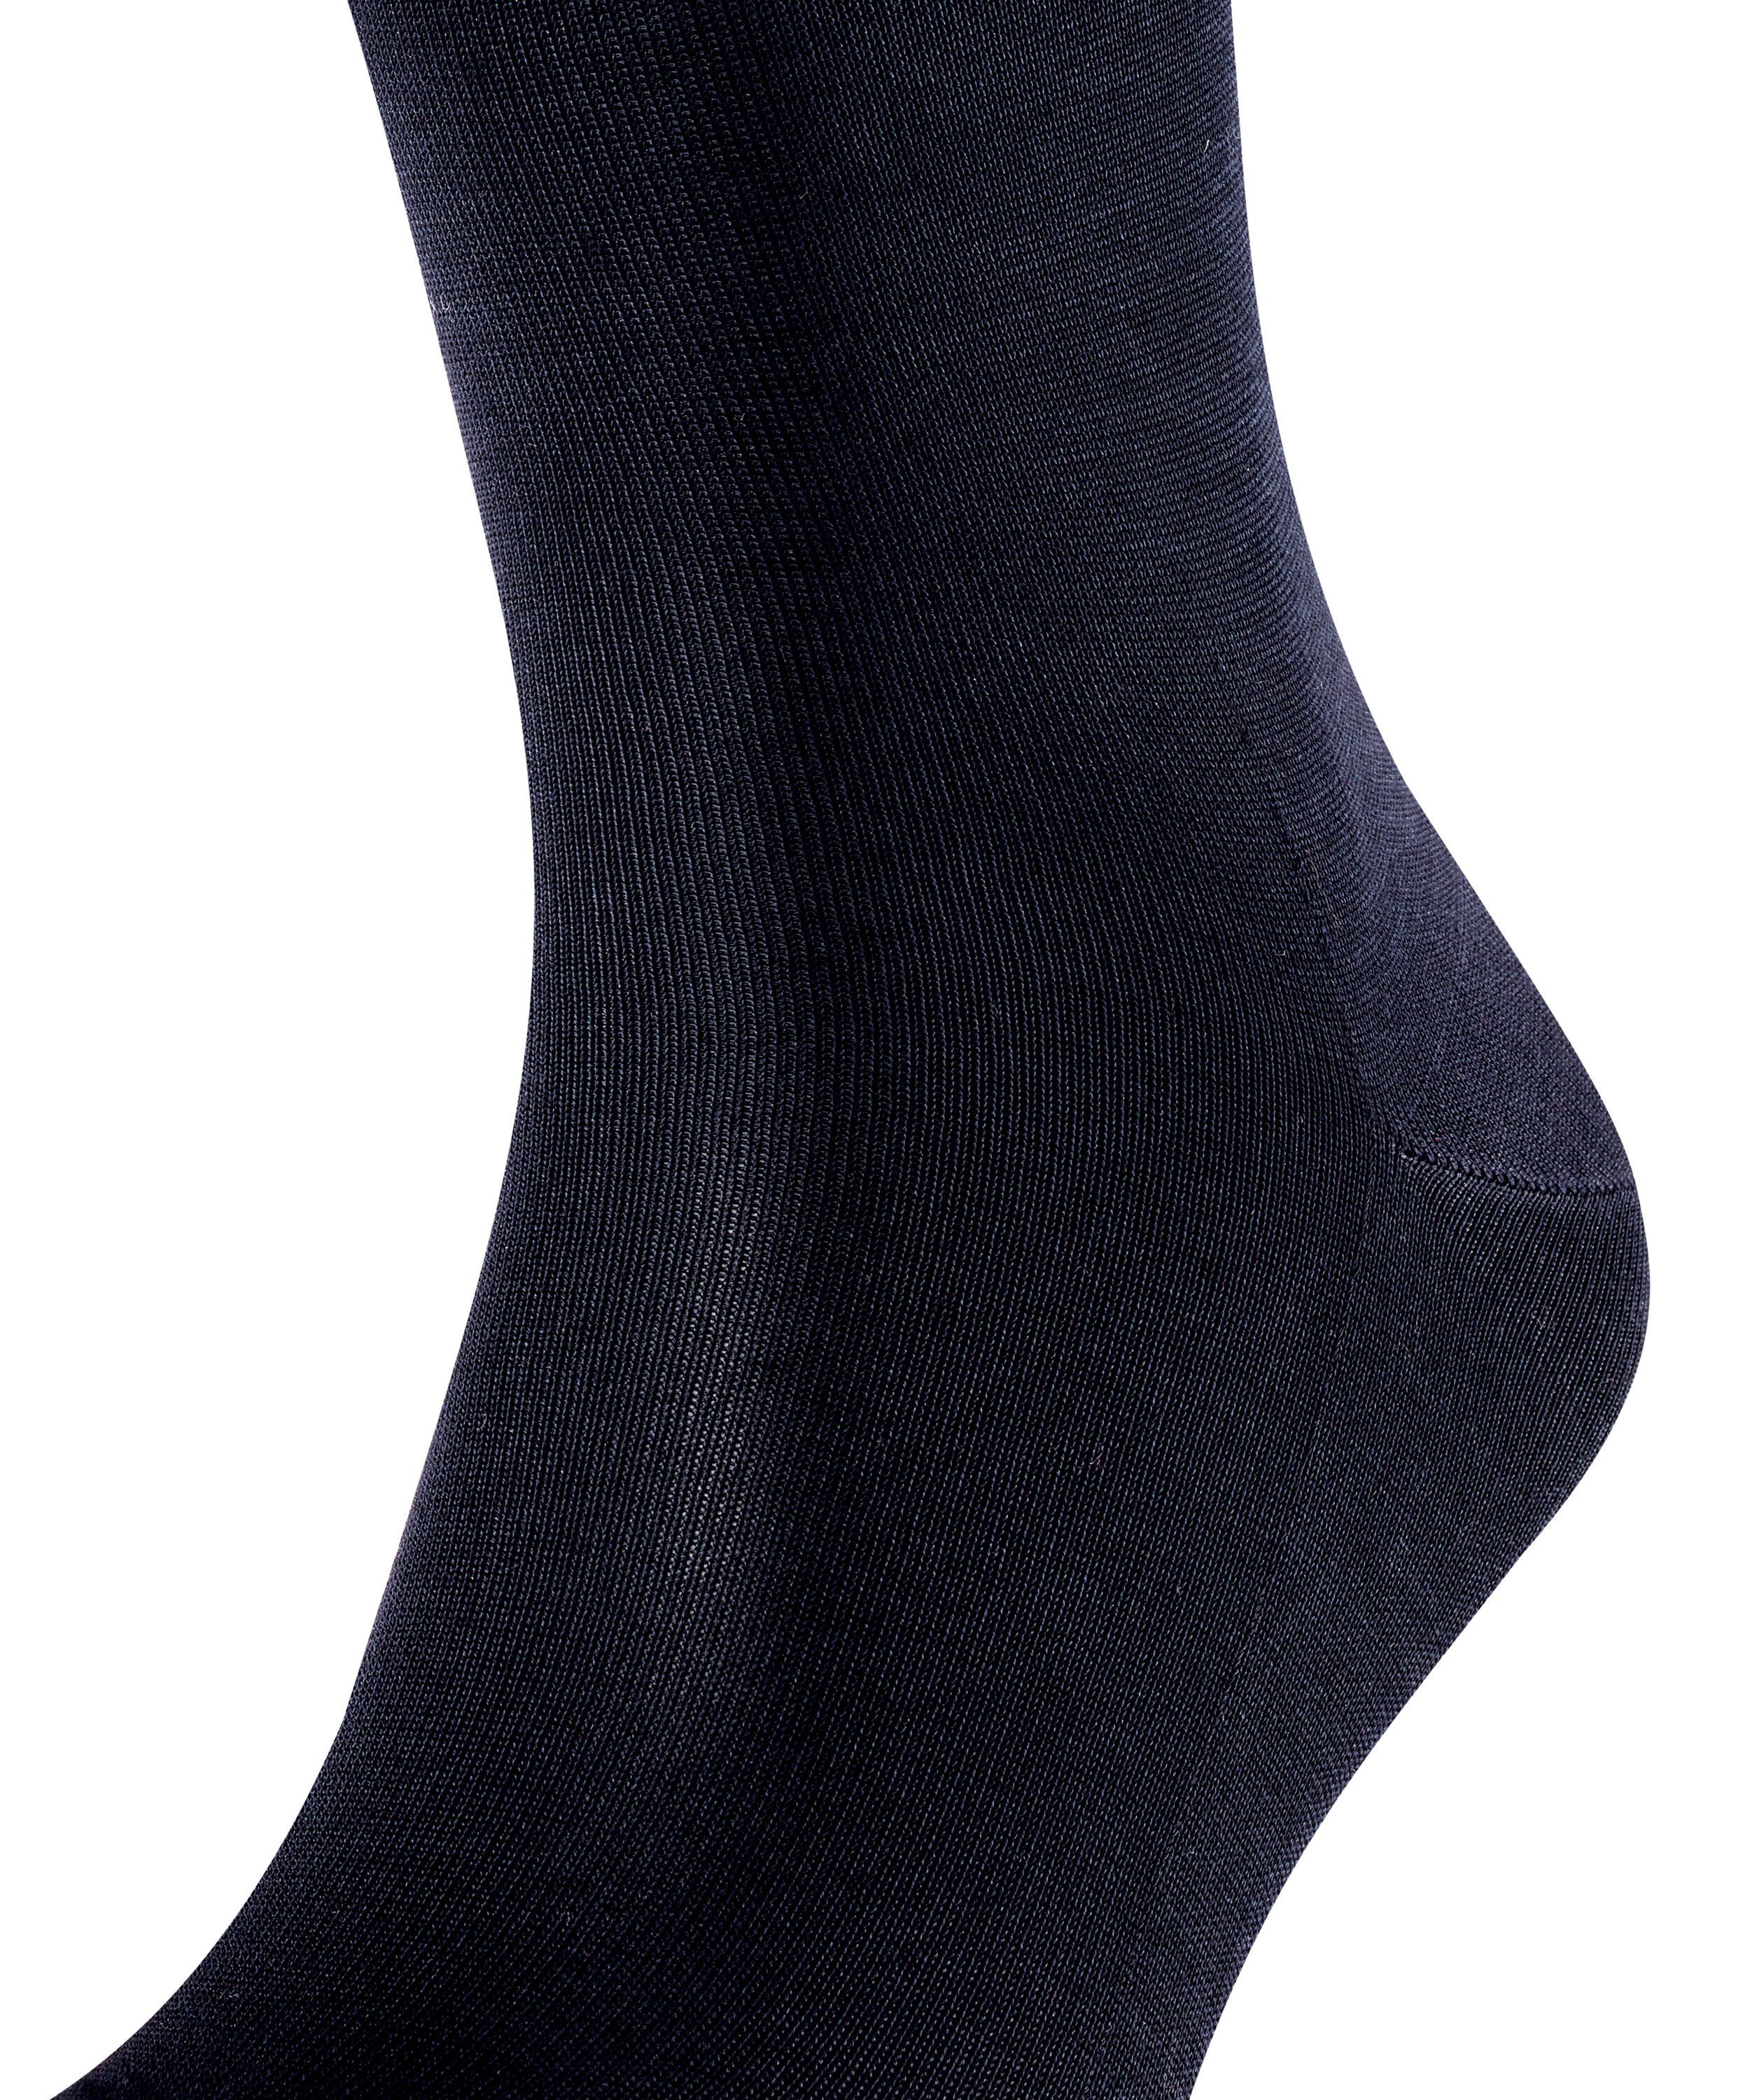 Tiago FALKE (1-Paar) dark navy (6370) Socken